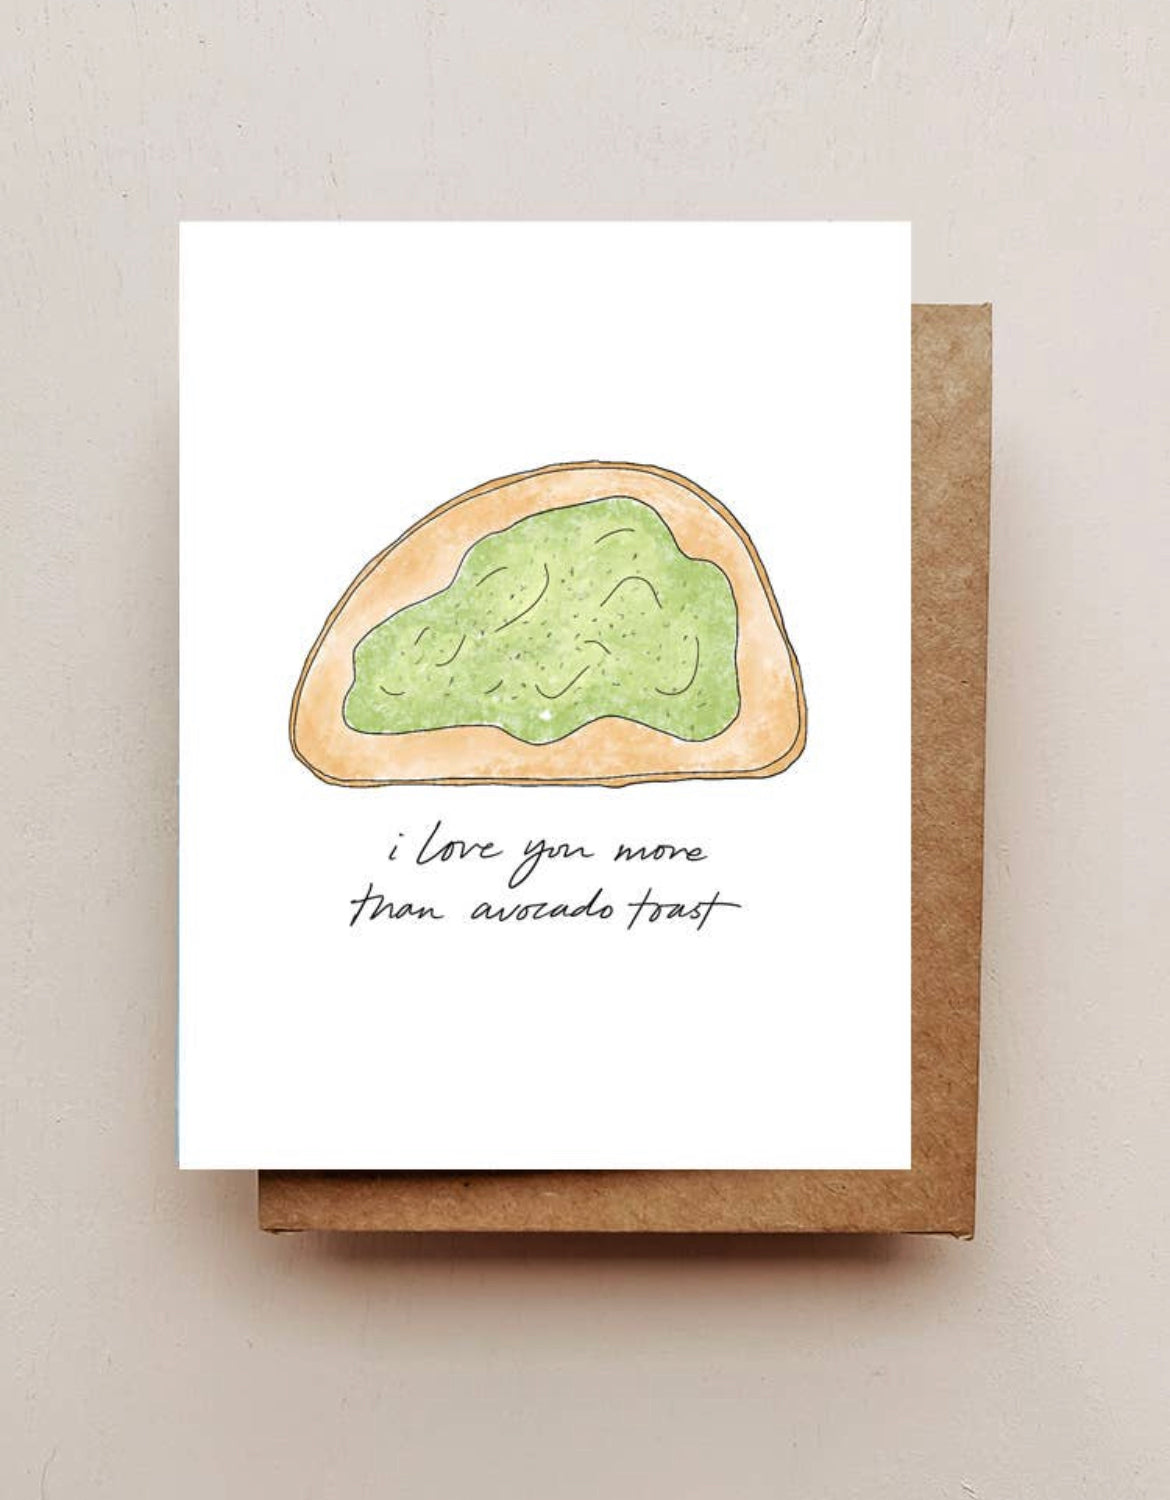 Avocado toast card